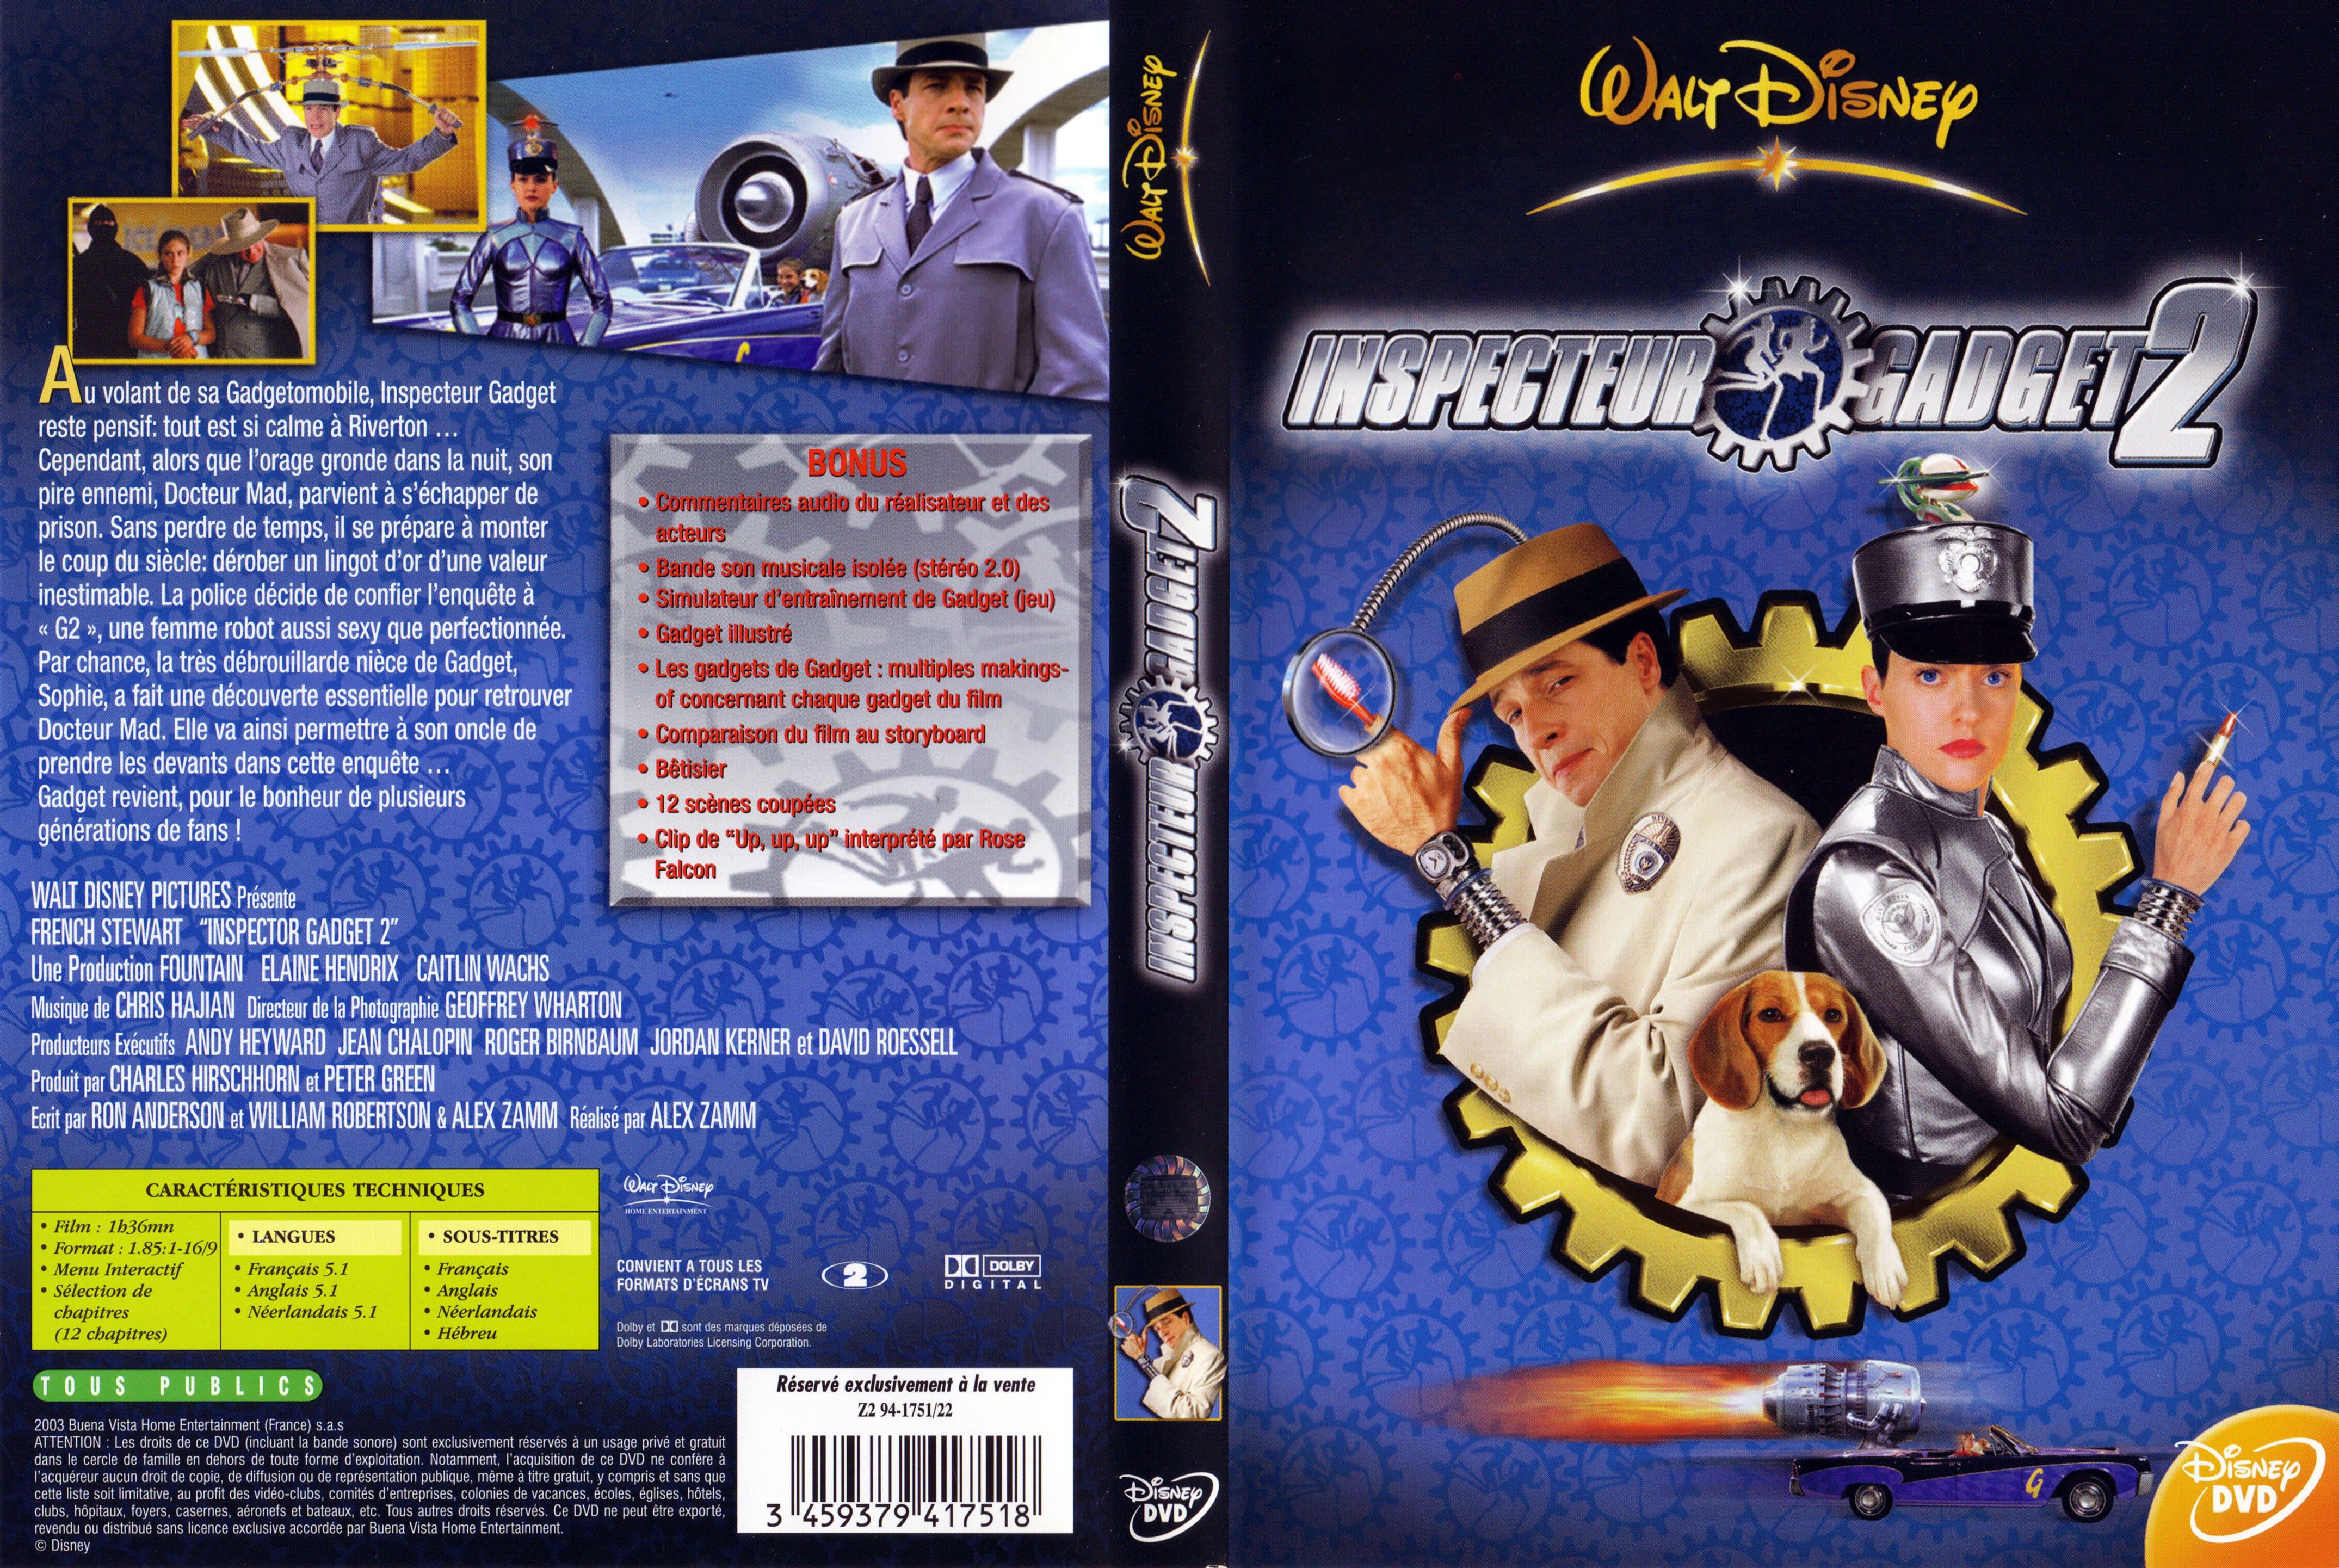 Jaquette DVD Inspecteur Gadget 2 v2